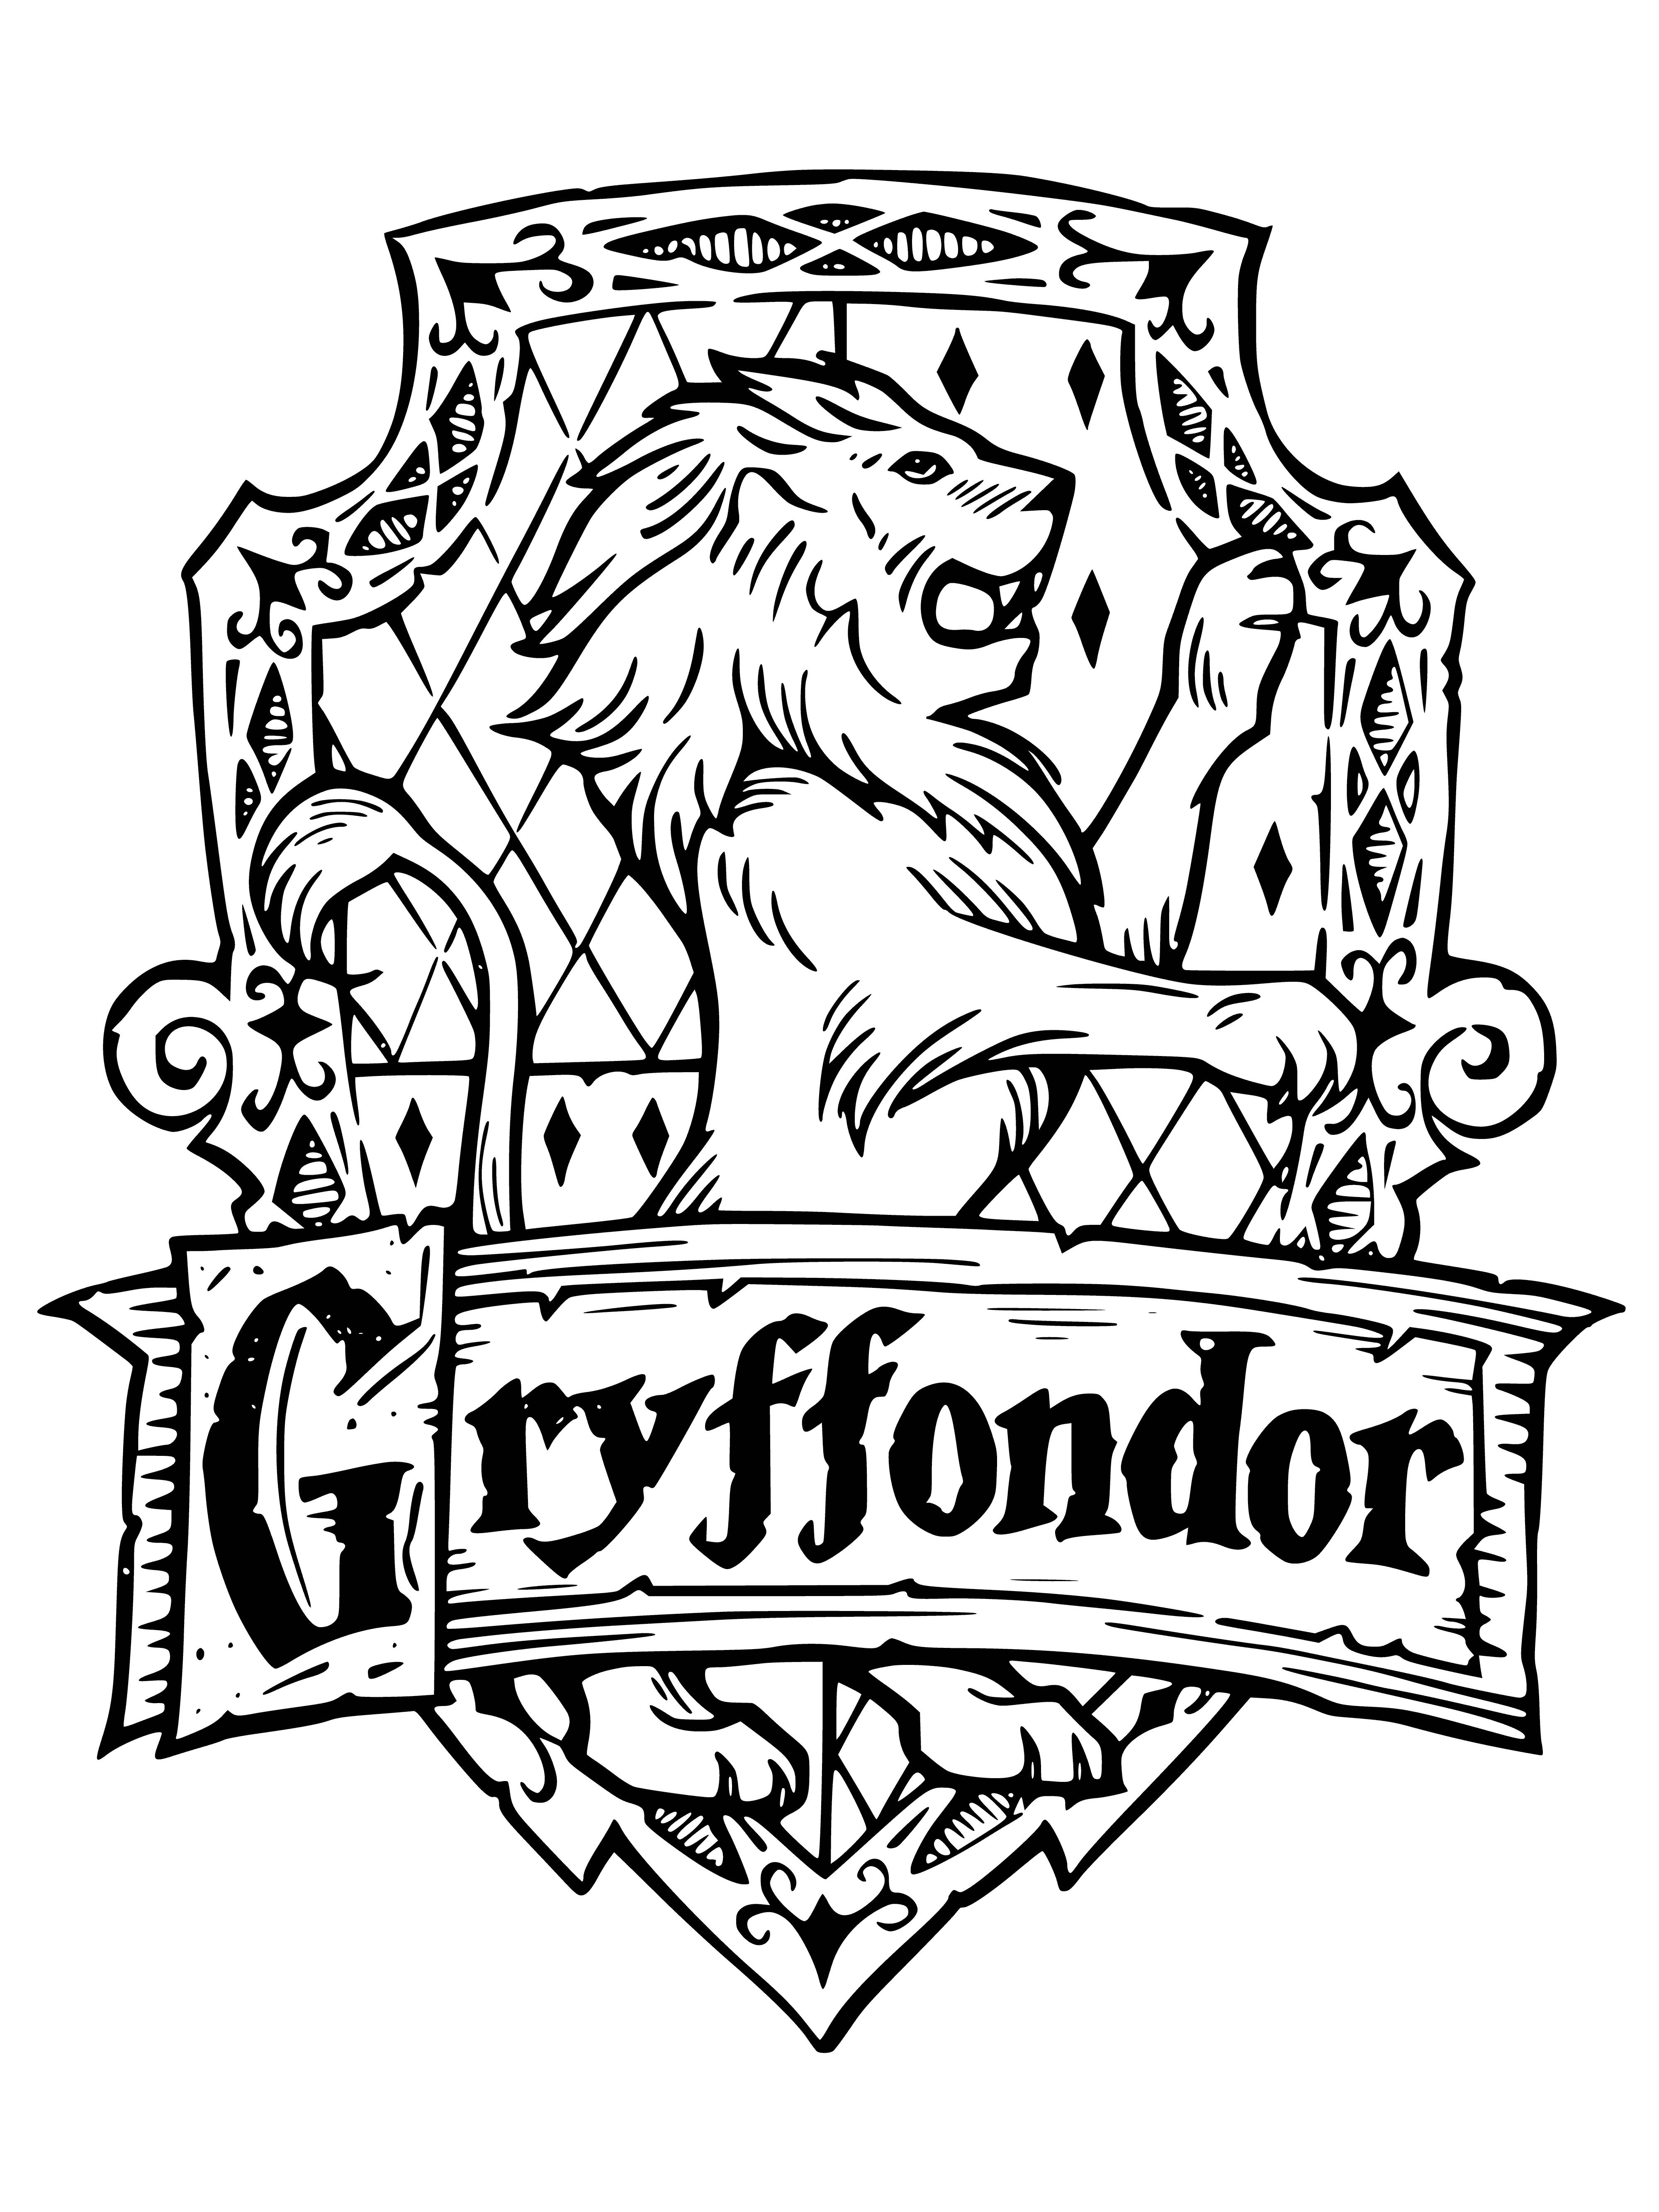 Gryffindor-huiswapen inkleurbladsy